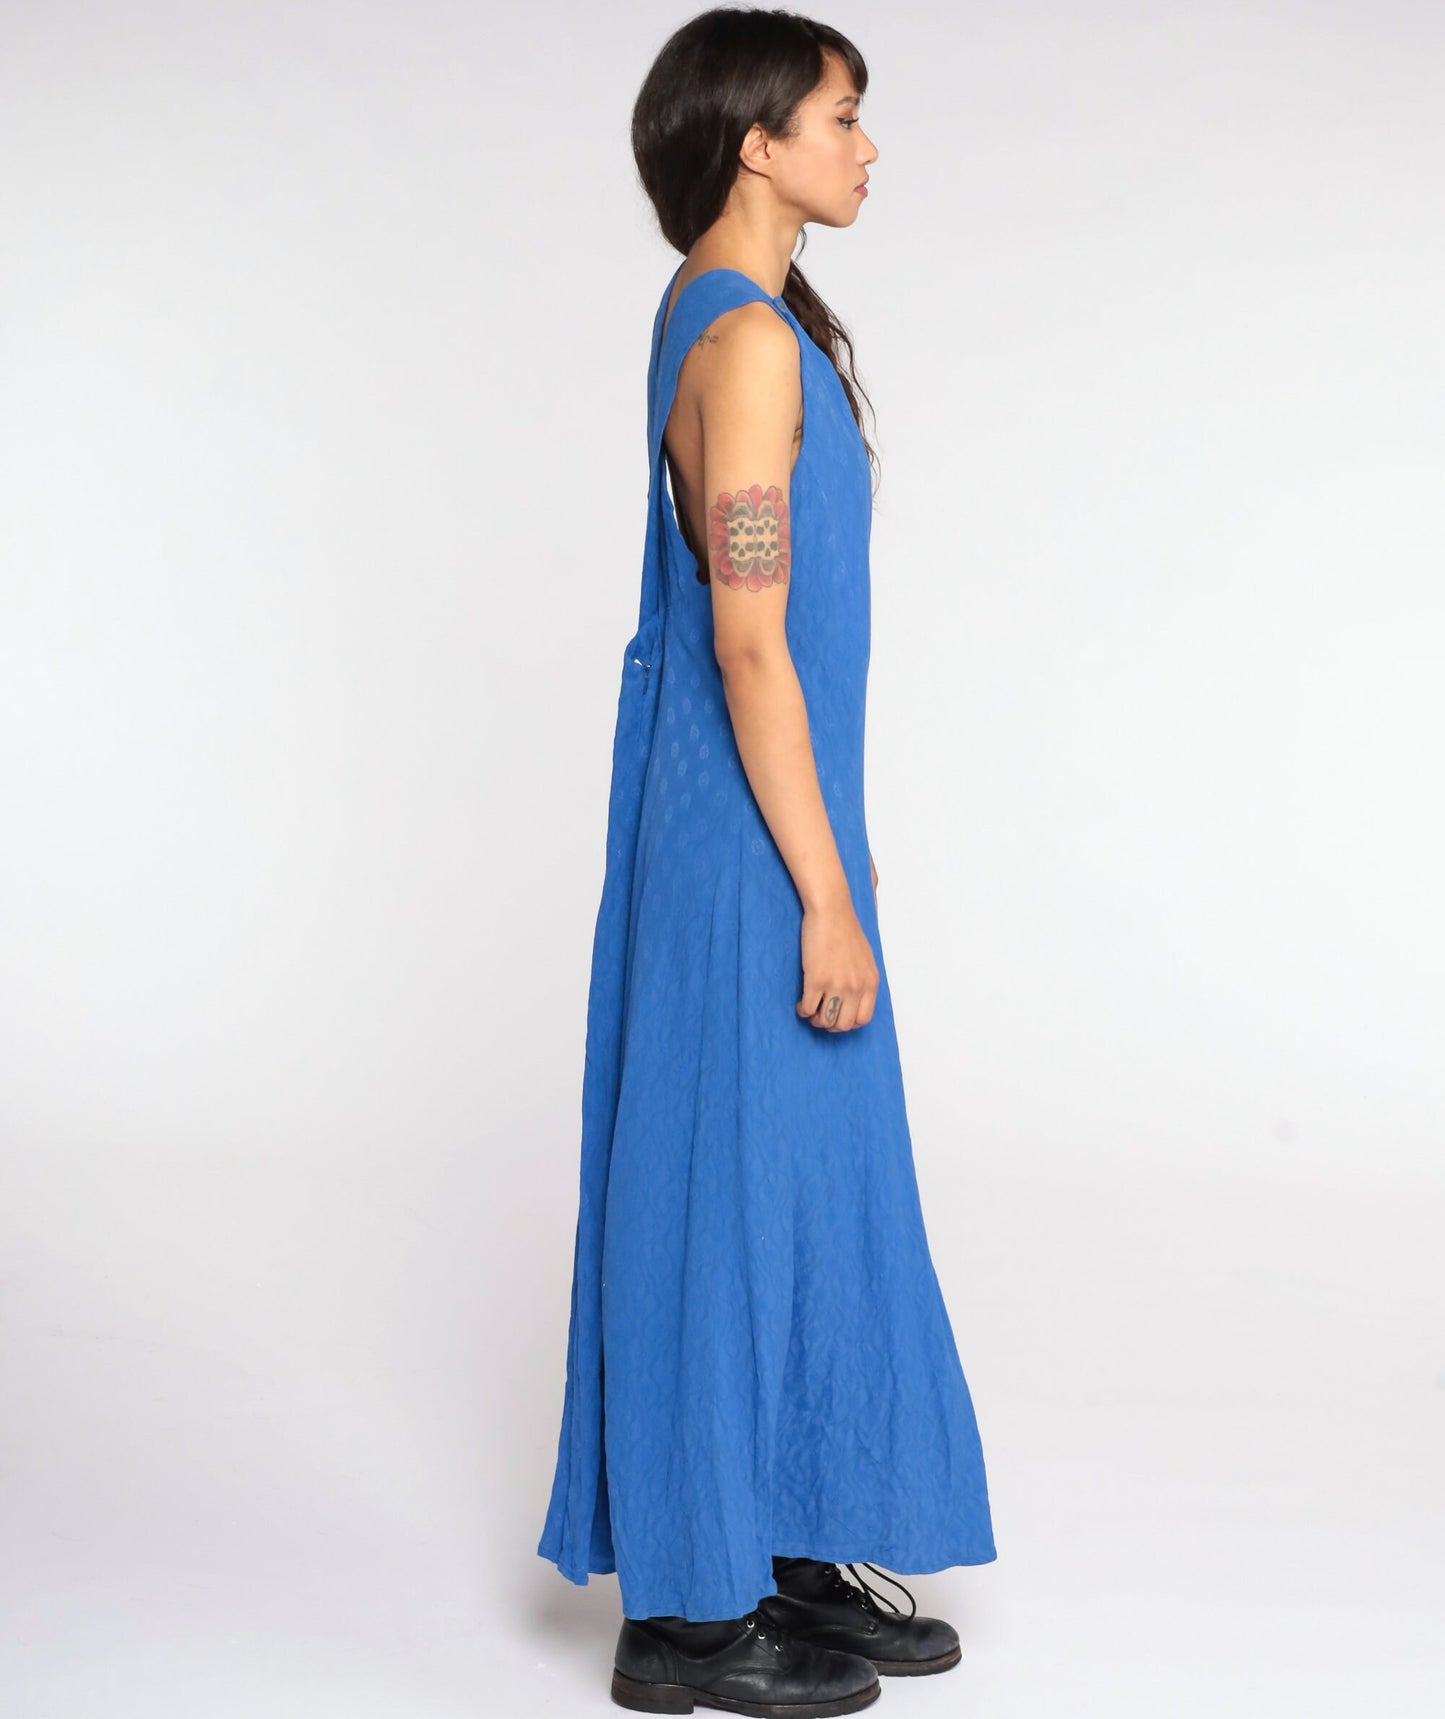 Liz Claiborne Dress 90s Maxi Dress Blue Dress Embossed Jumper Dress Sleeveless Dress Vintage 1990s Bohemian Retro Sheath Criss Cross Medium